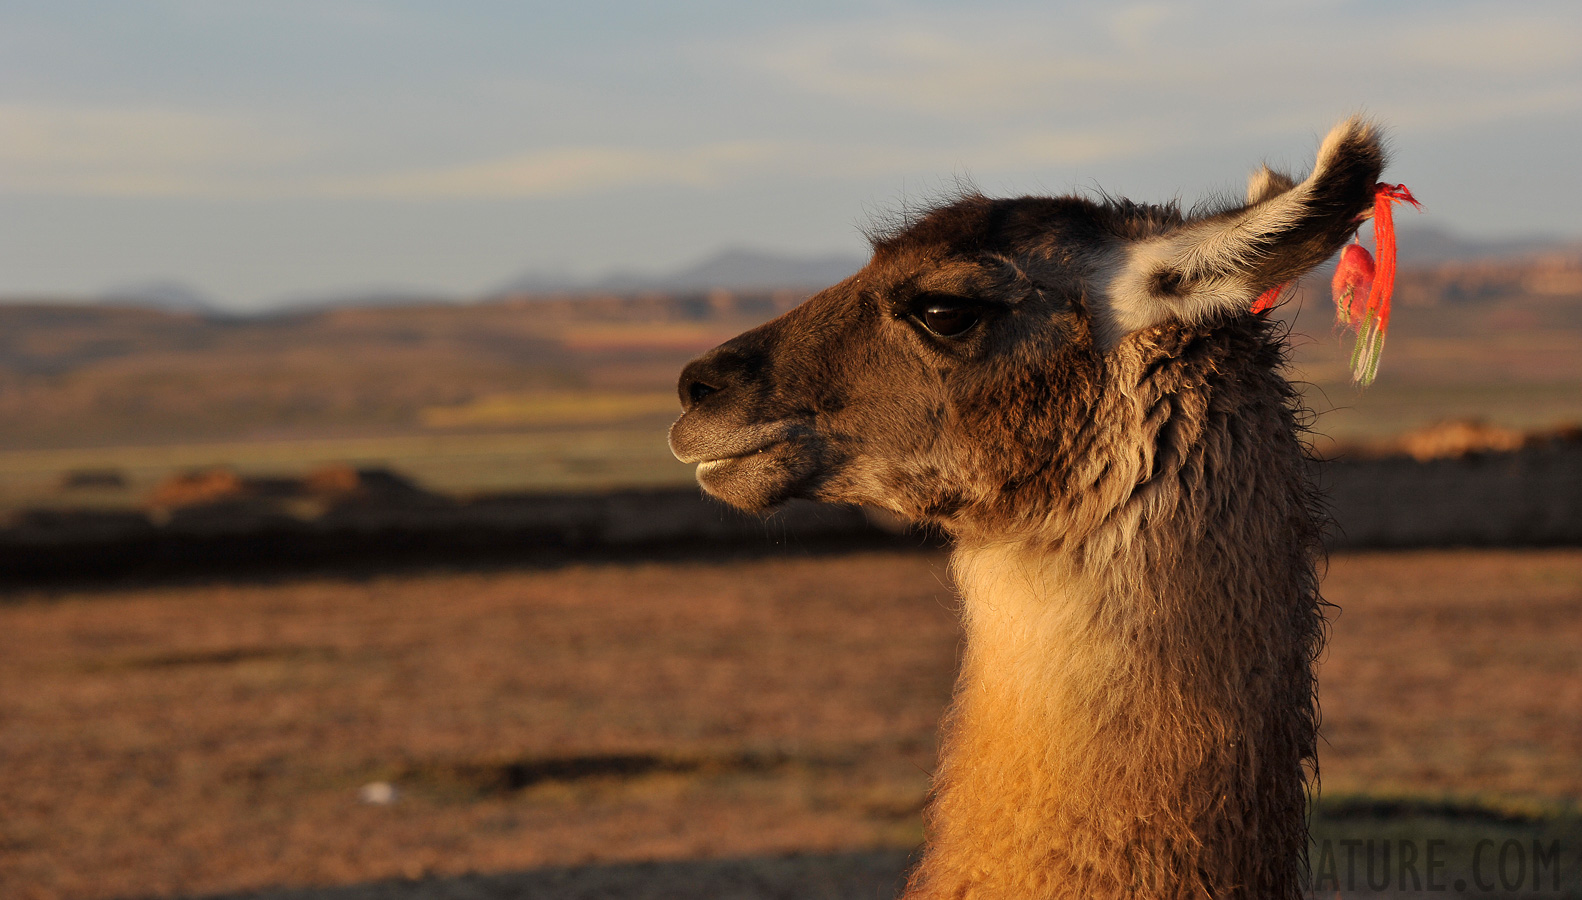 The lamas enjoy the warming sun [112 mm, 1/400 sec at f / 7.1, ISO 500]